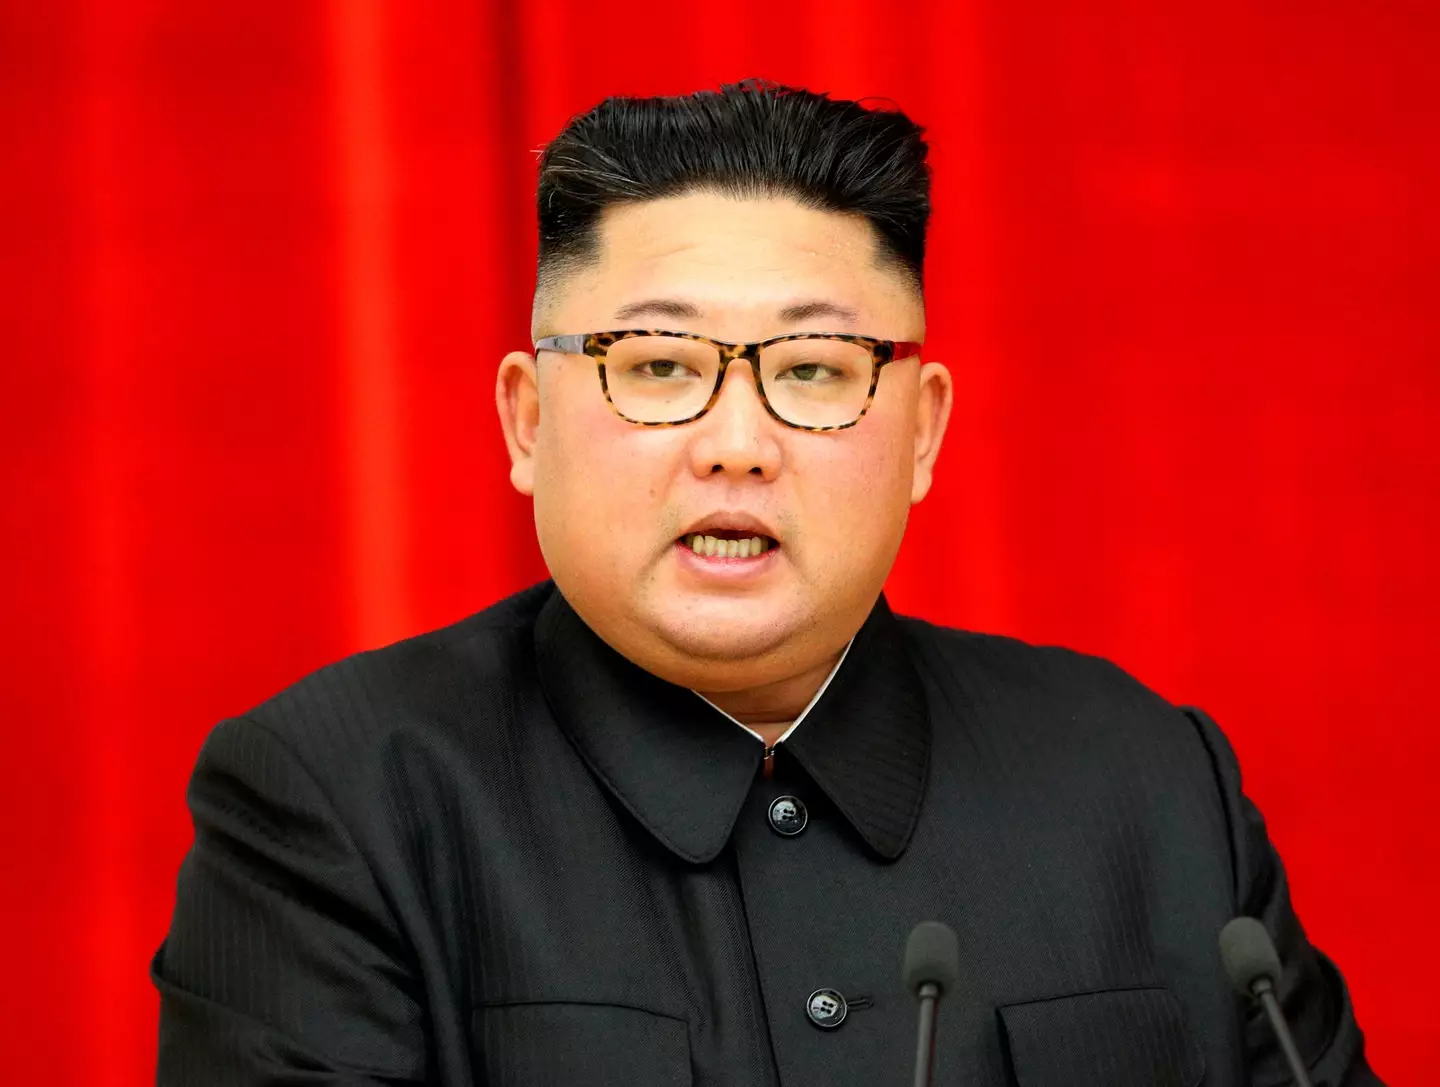 Kim Jong Un is addressing the 'anti-enemy struggle'.